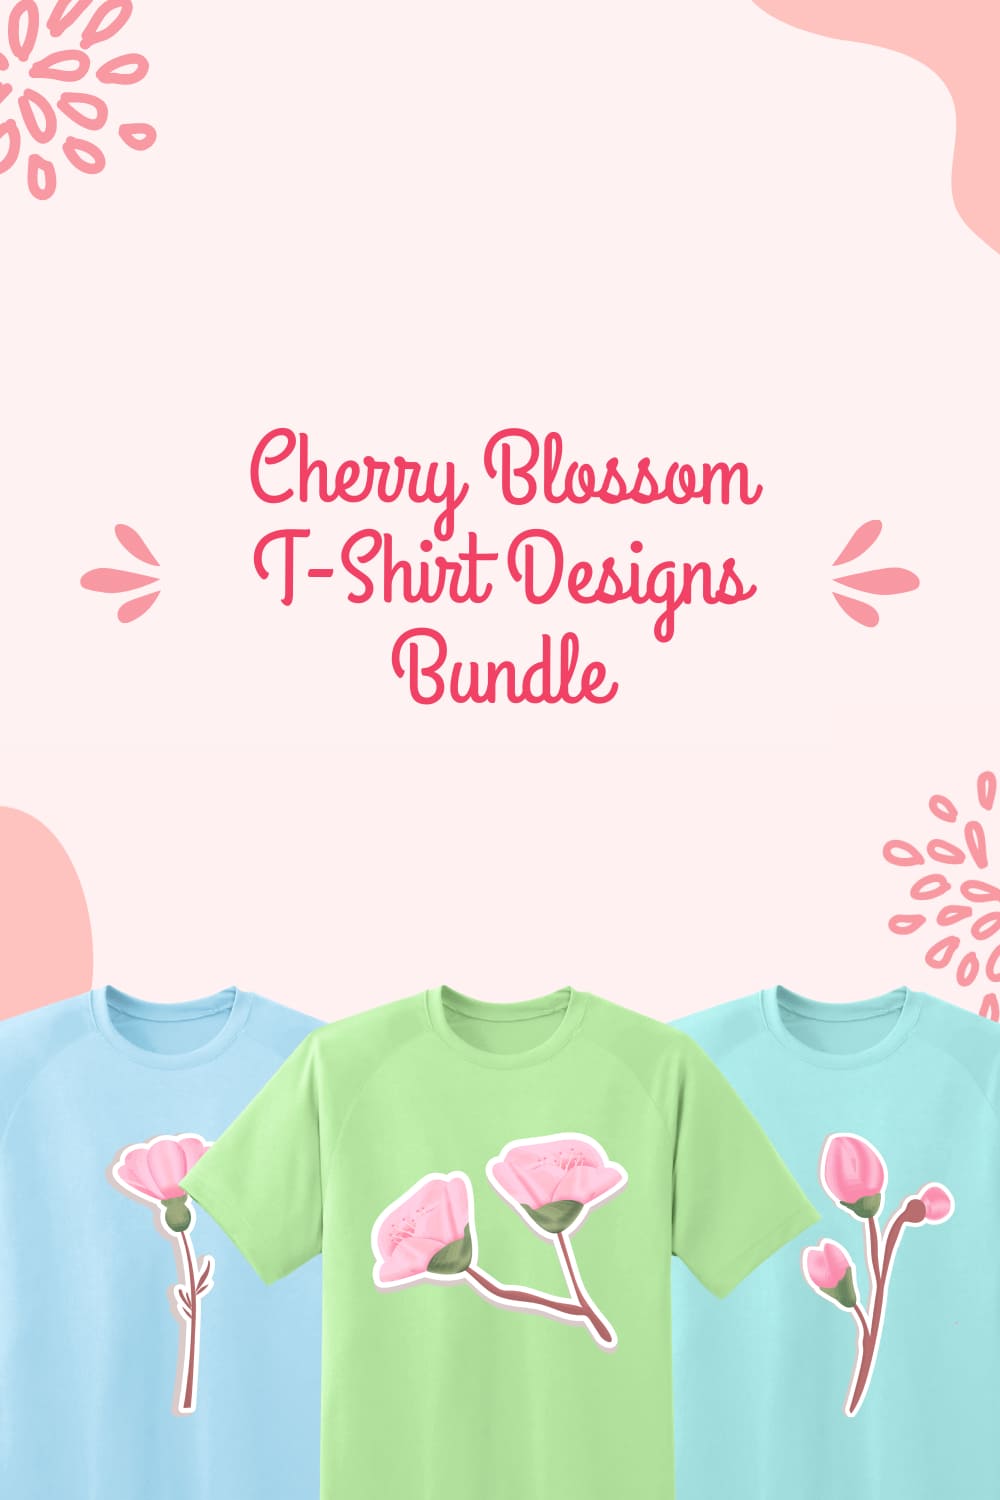 Cherry blossom t shirt designs images of pinterest..